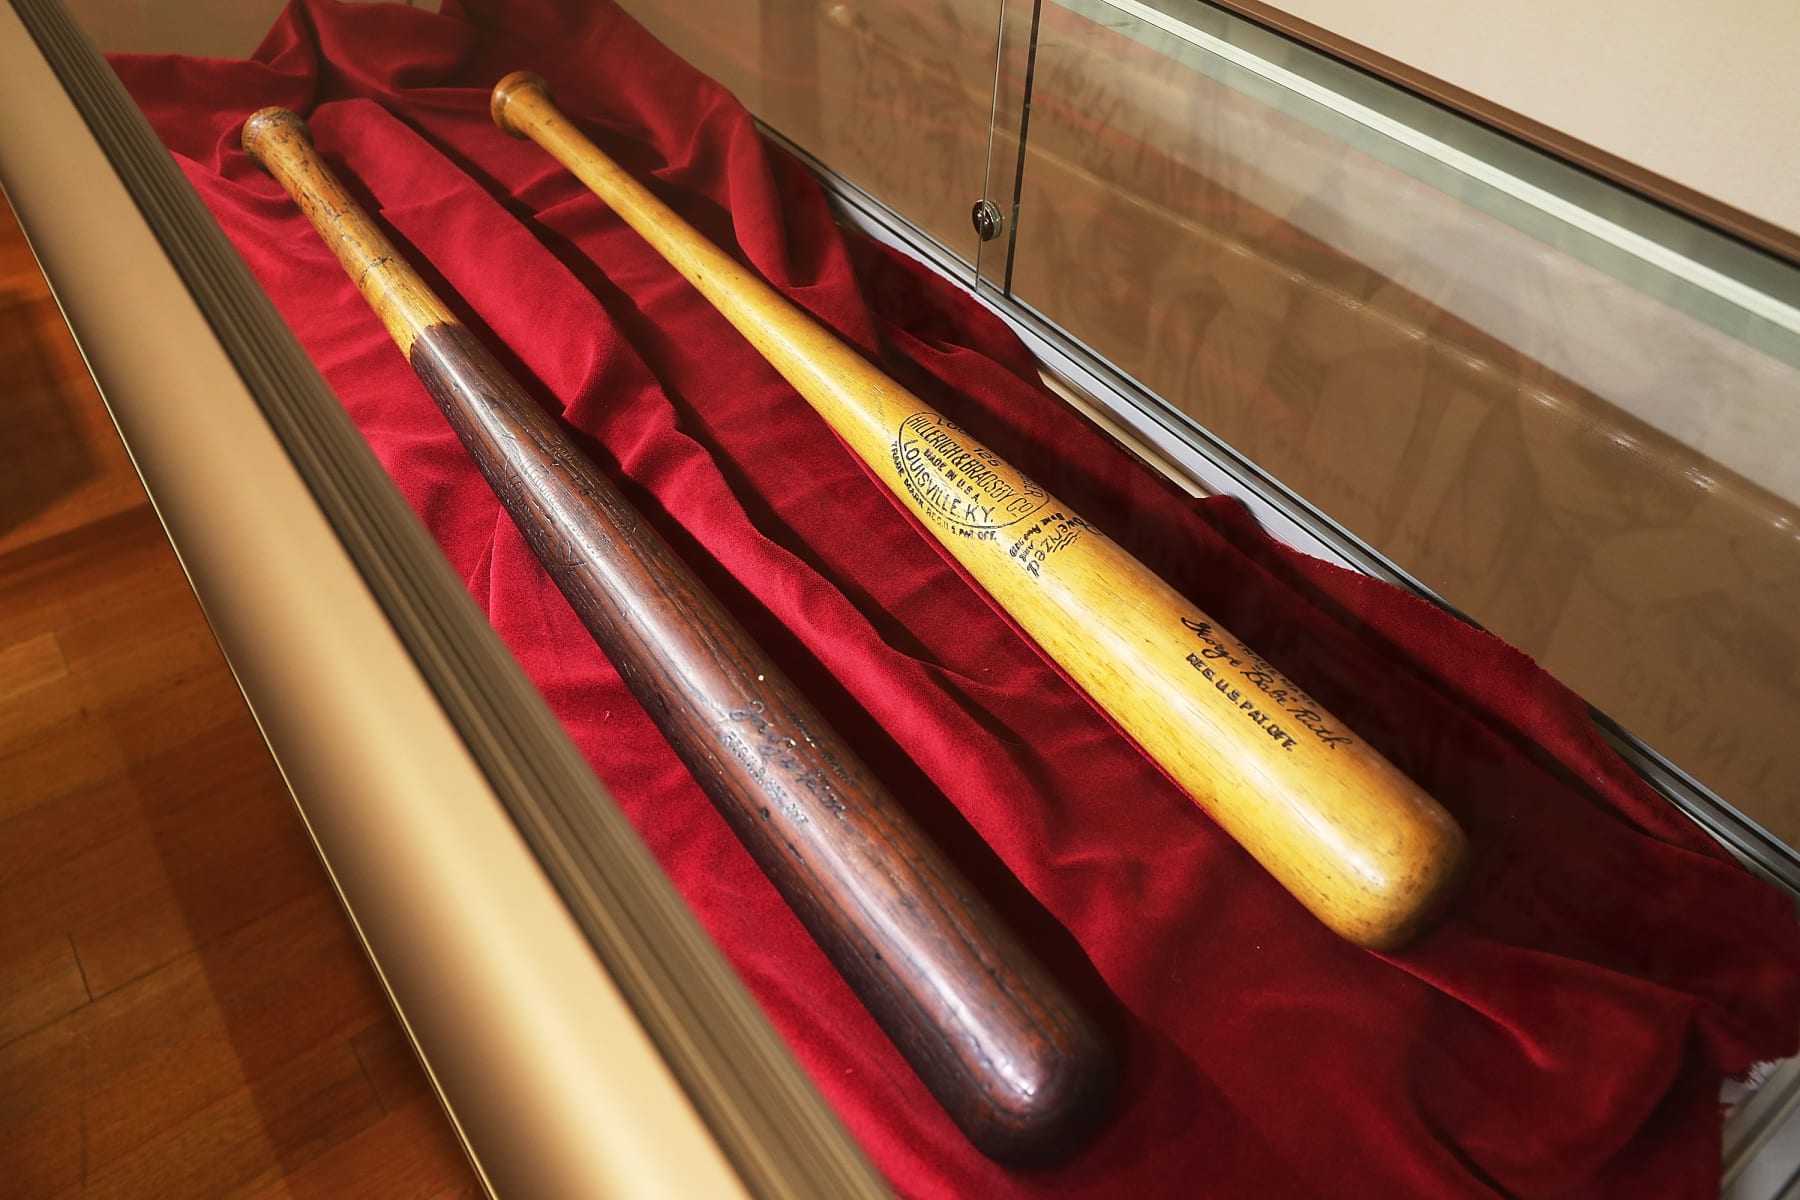 Baseball bat Babe Ruth used before Yankee Stadium sells for $1.85M